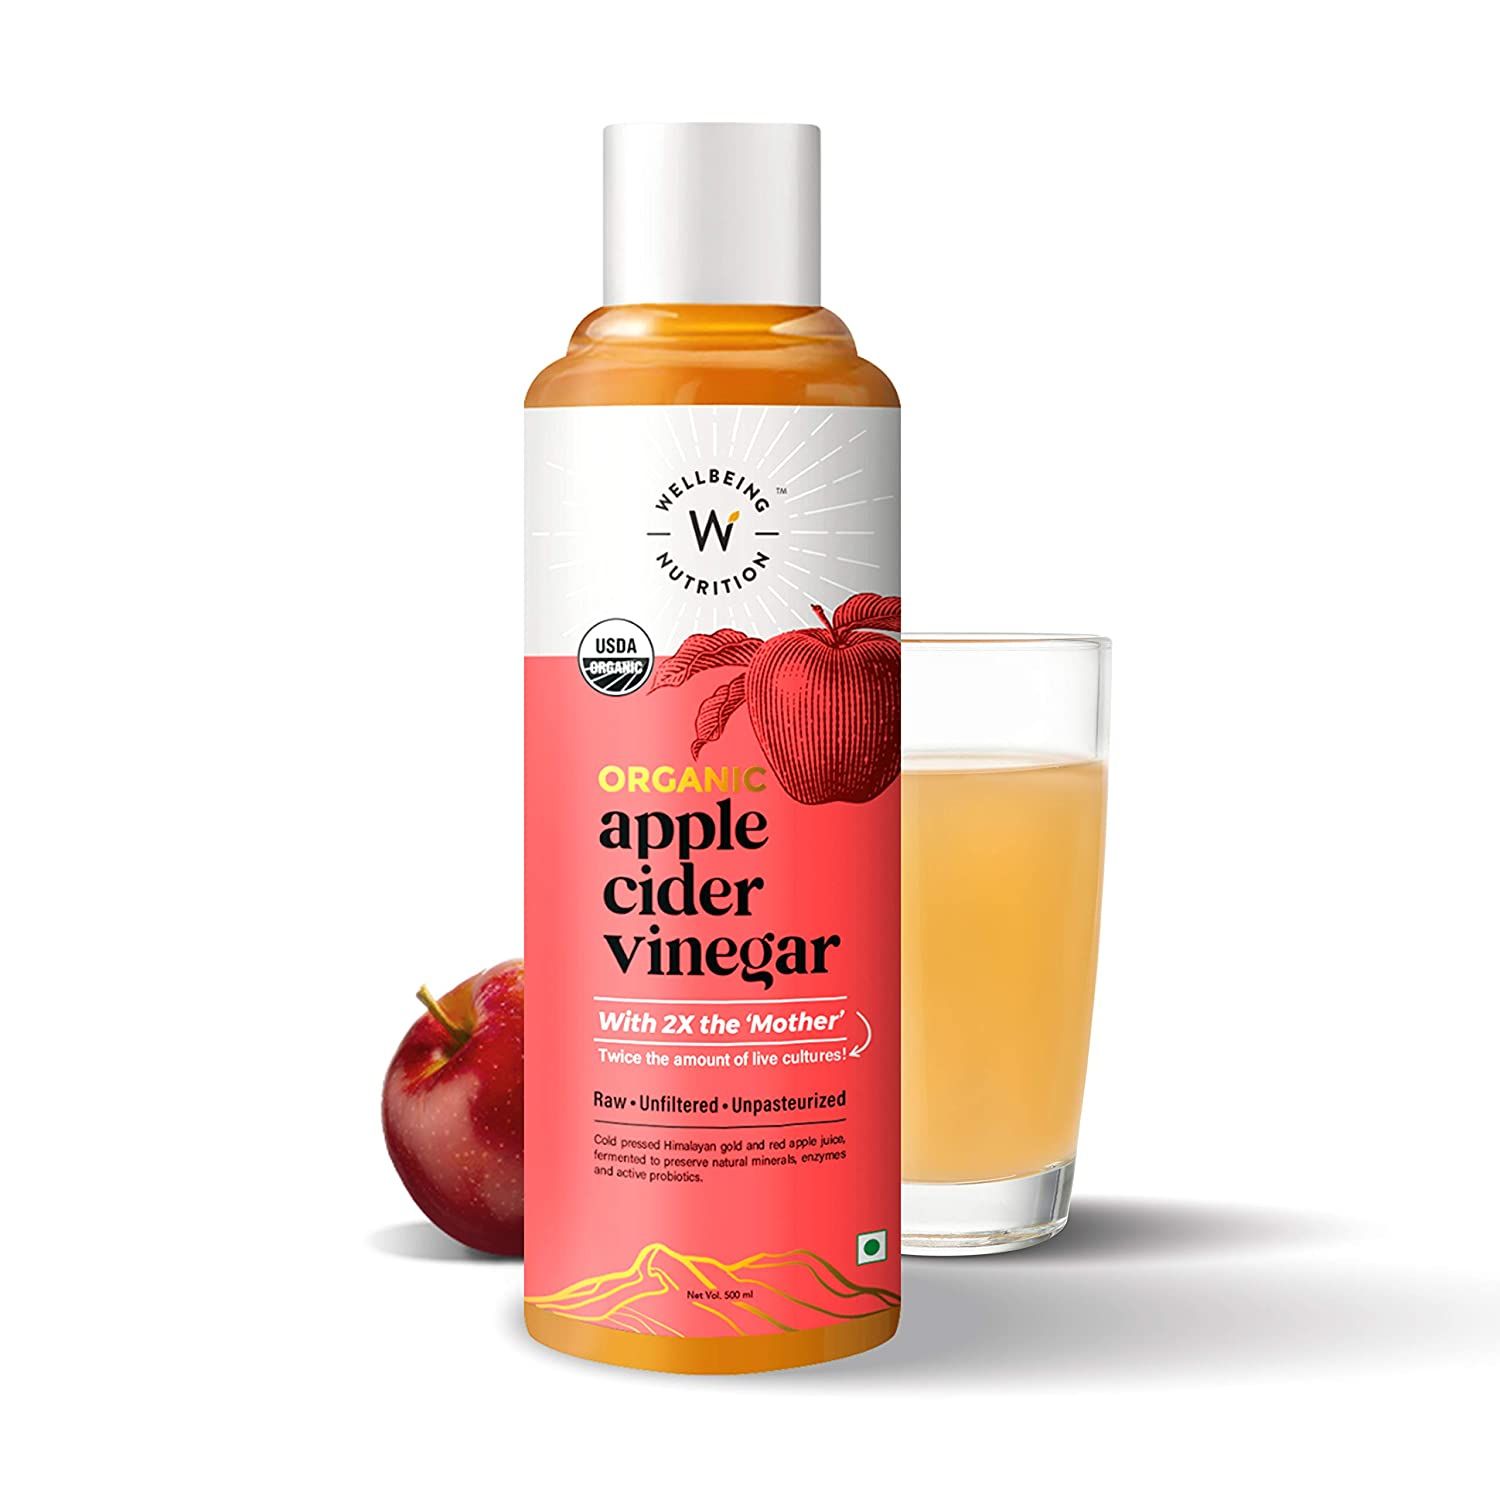 Wellbeing Apple Cider Vinegar Image